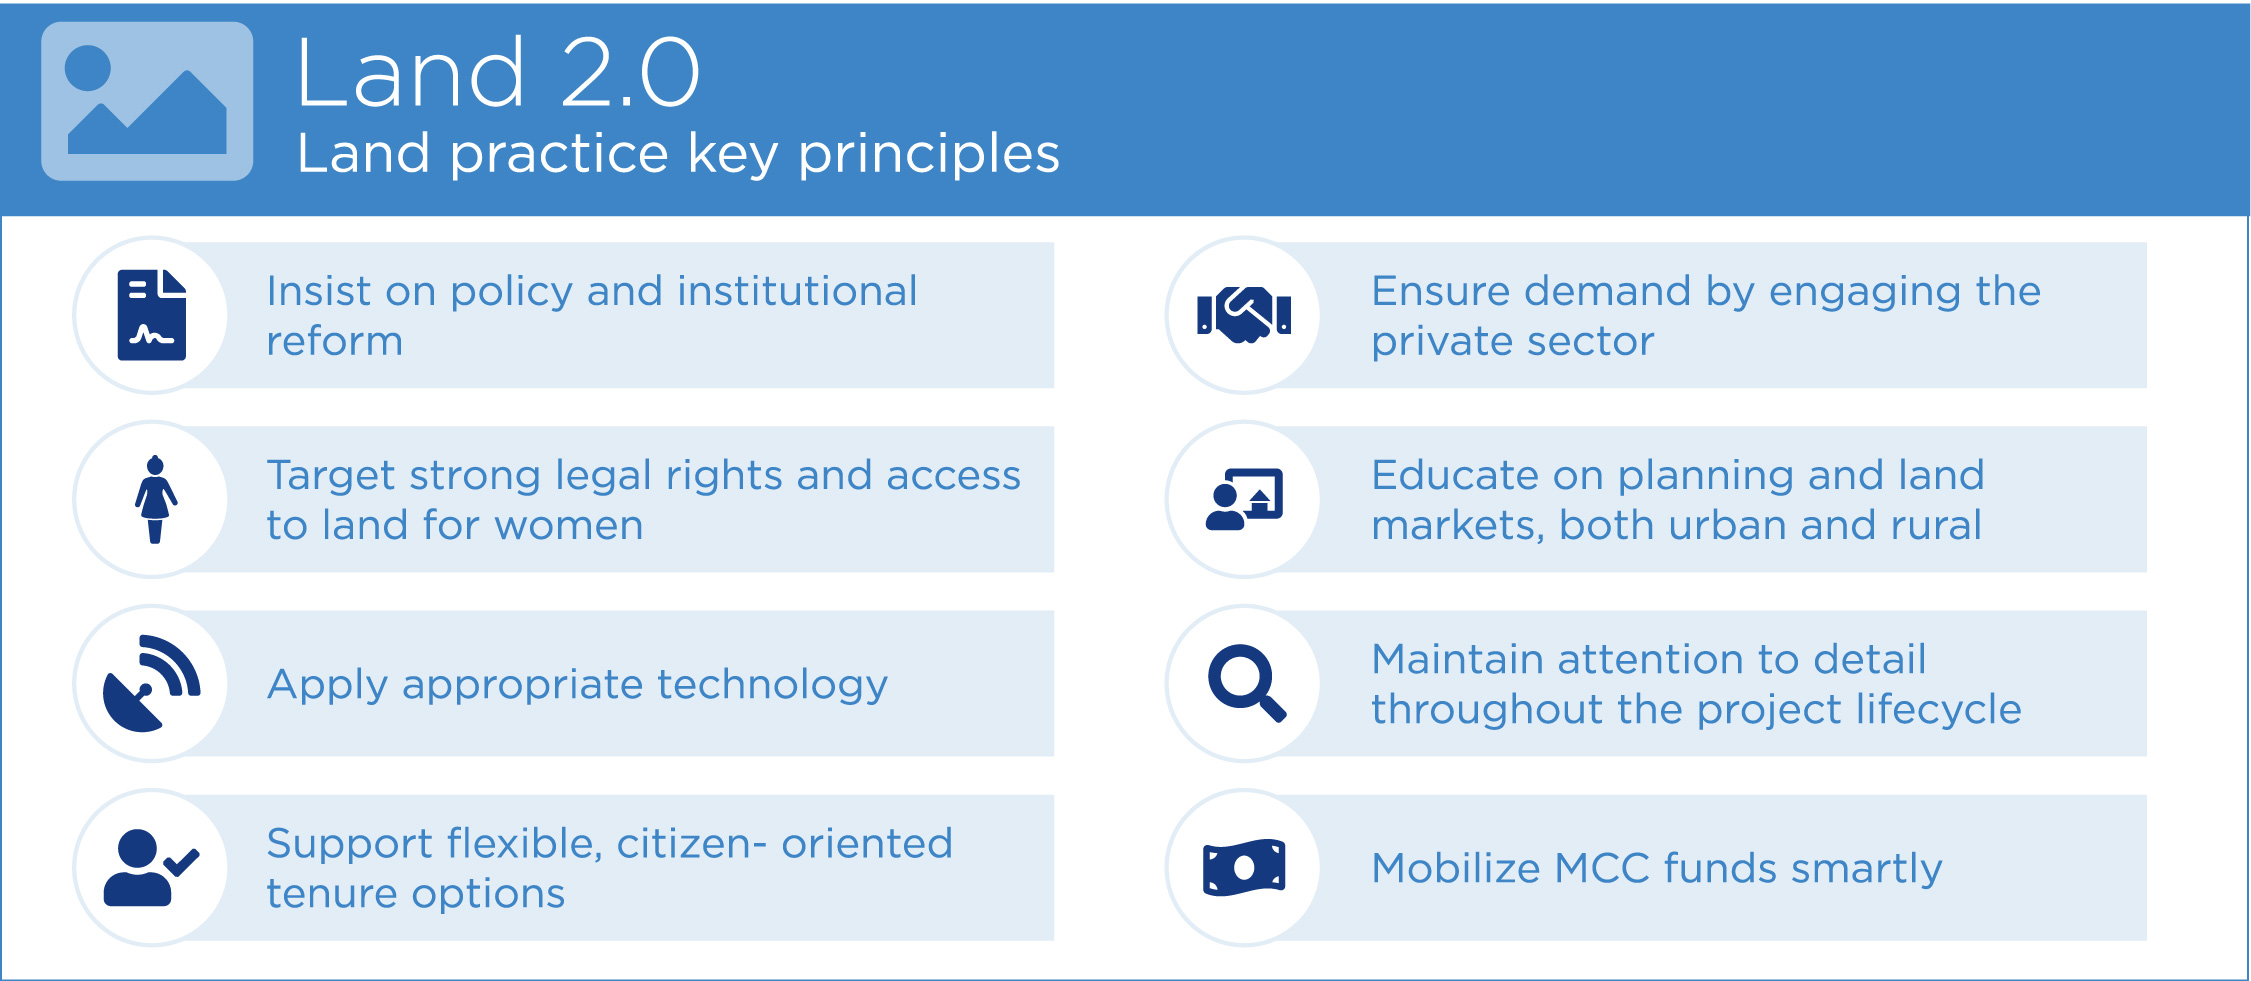 8 land practice key principles